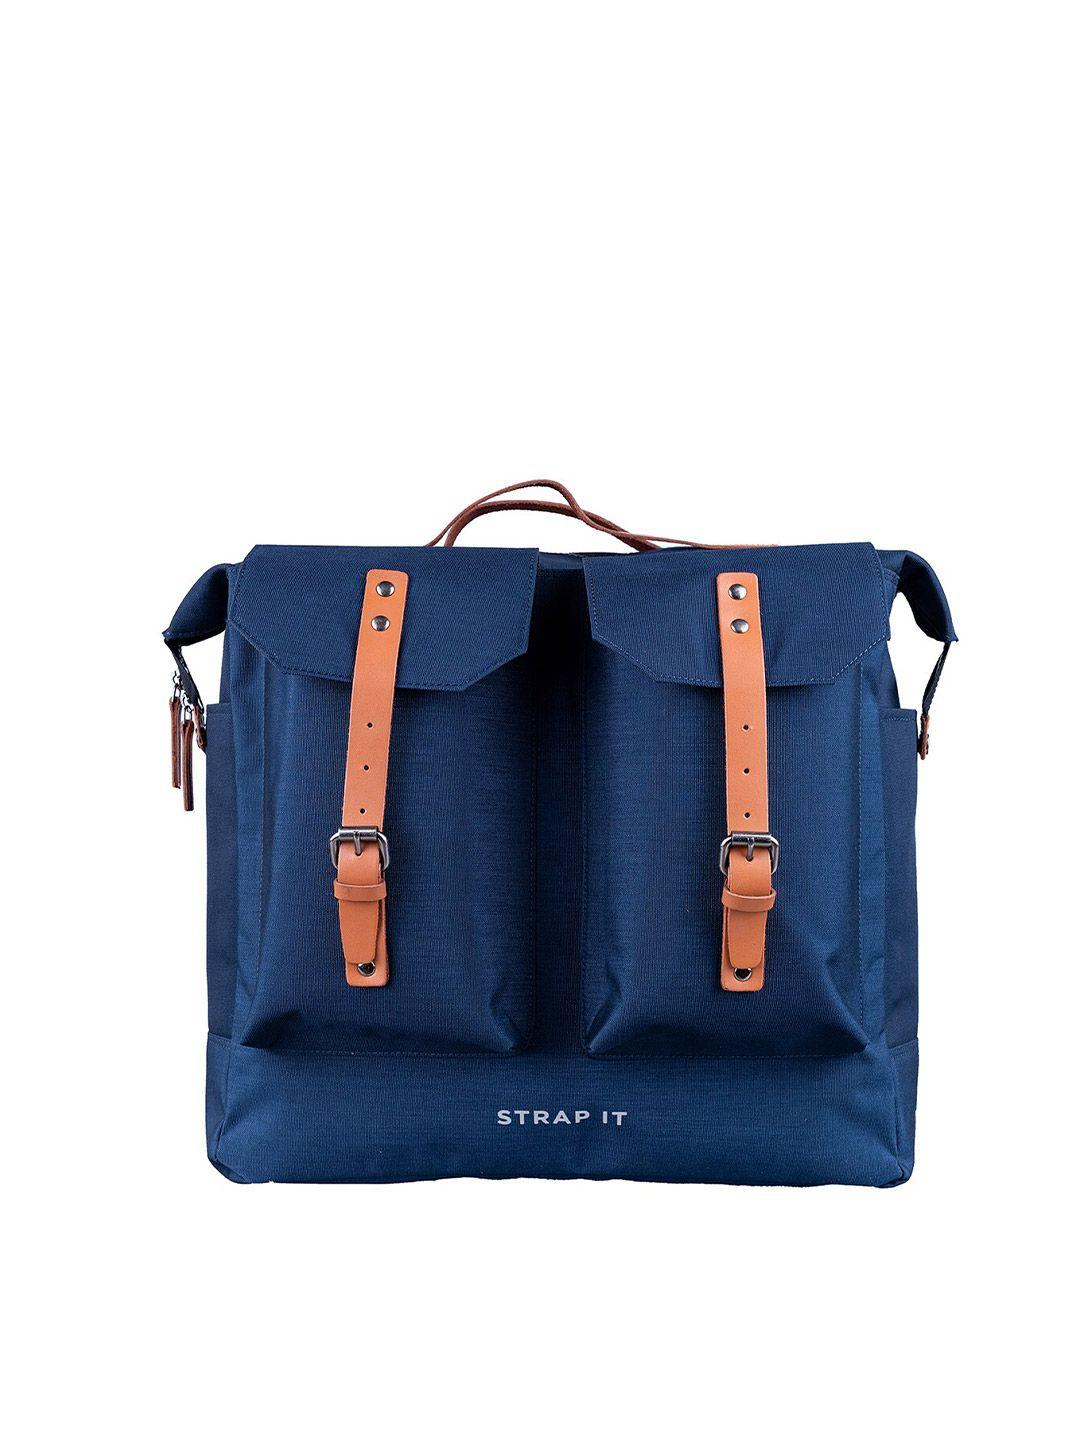 strap it unisex navy blue travel laptop backpack